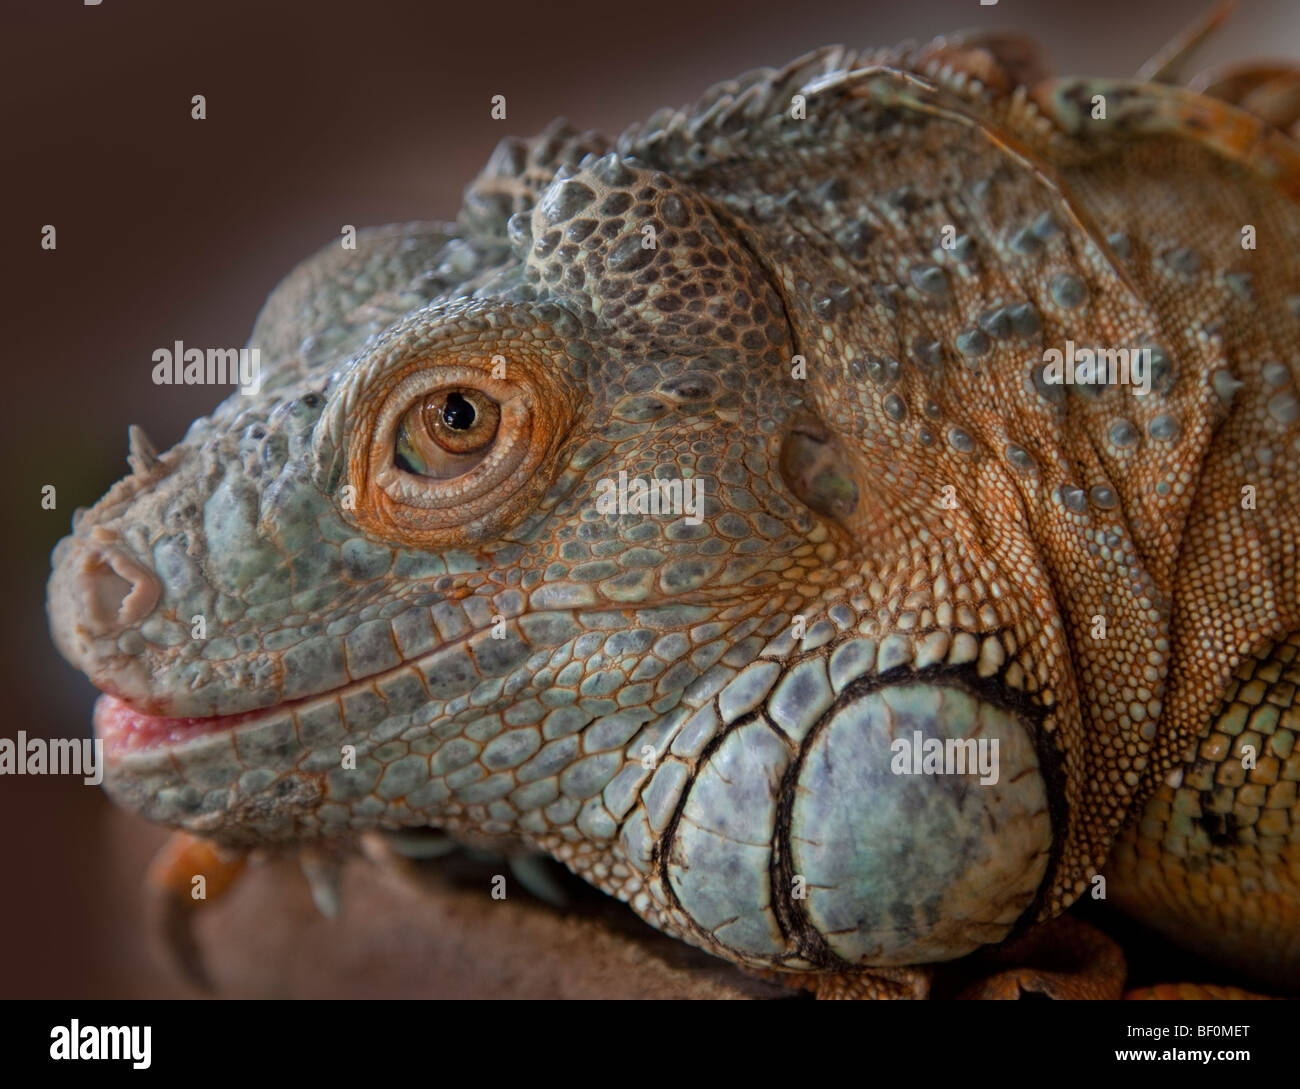 Iguana lizard head detail Stock Photo